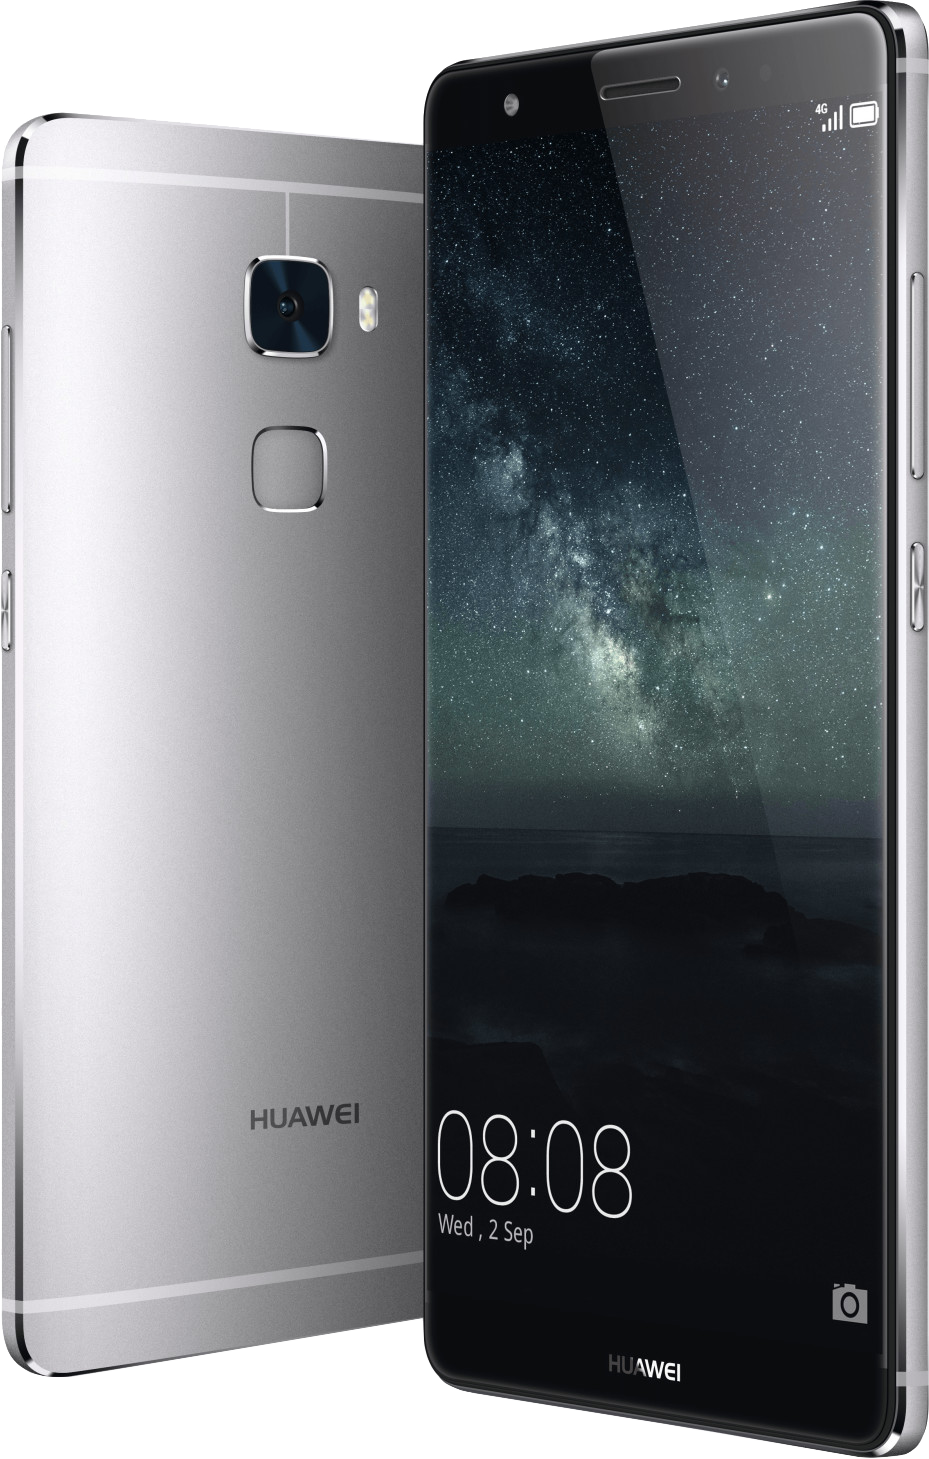 Huawei Mate S 32 GB grau - Ohne Vertrag